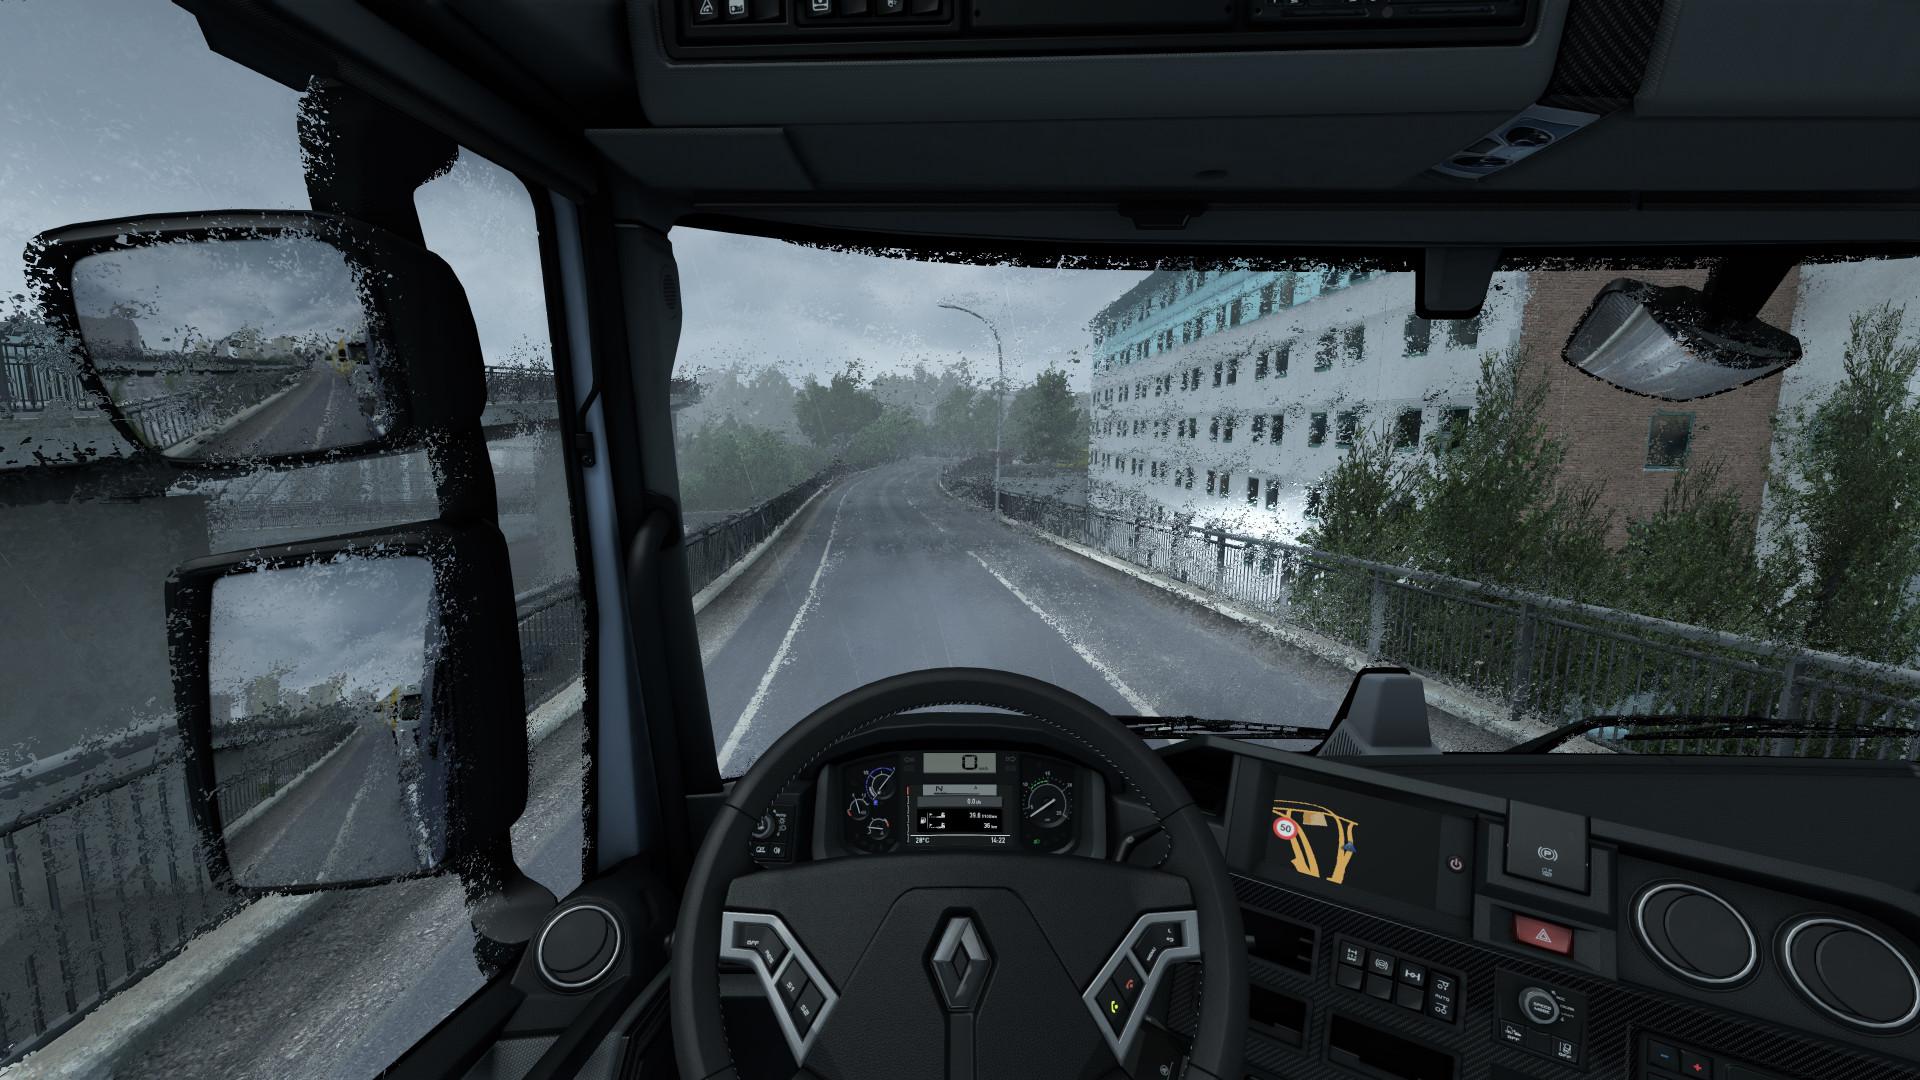 Realistic rain. Realistic Rain ETS 2. Реалистичный дождь для етс 2. Евро трек симулятор 2 реалистичный дождь. Етс 2 моды дождь.